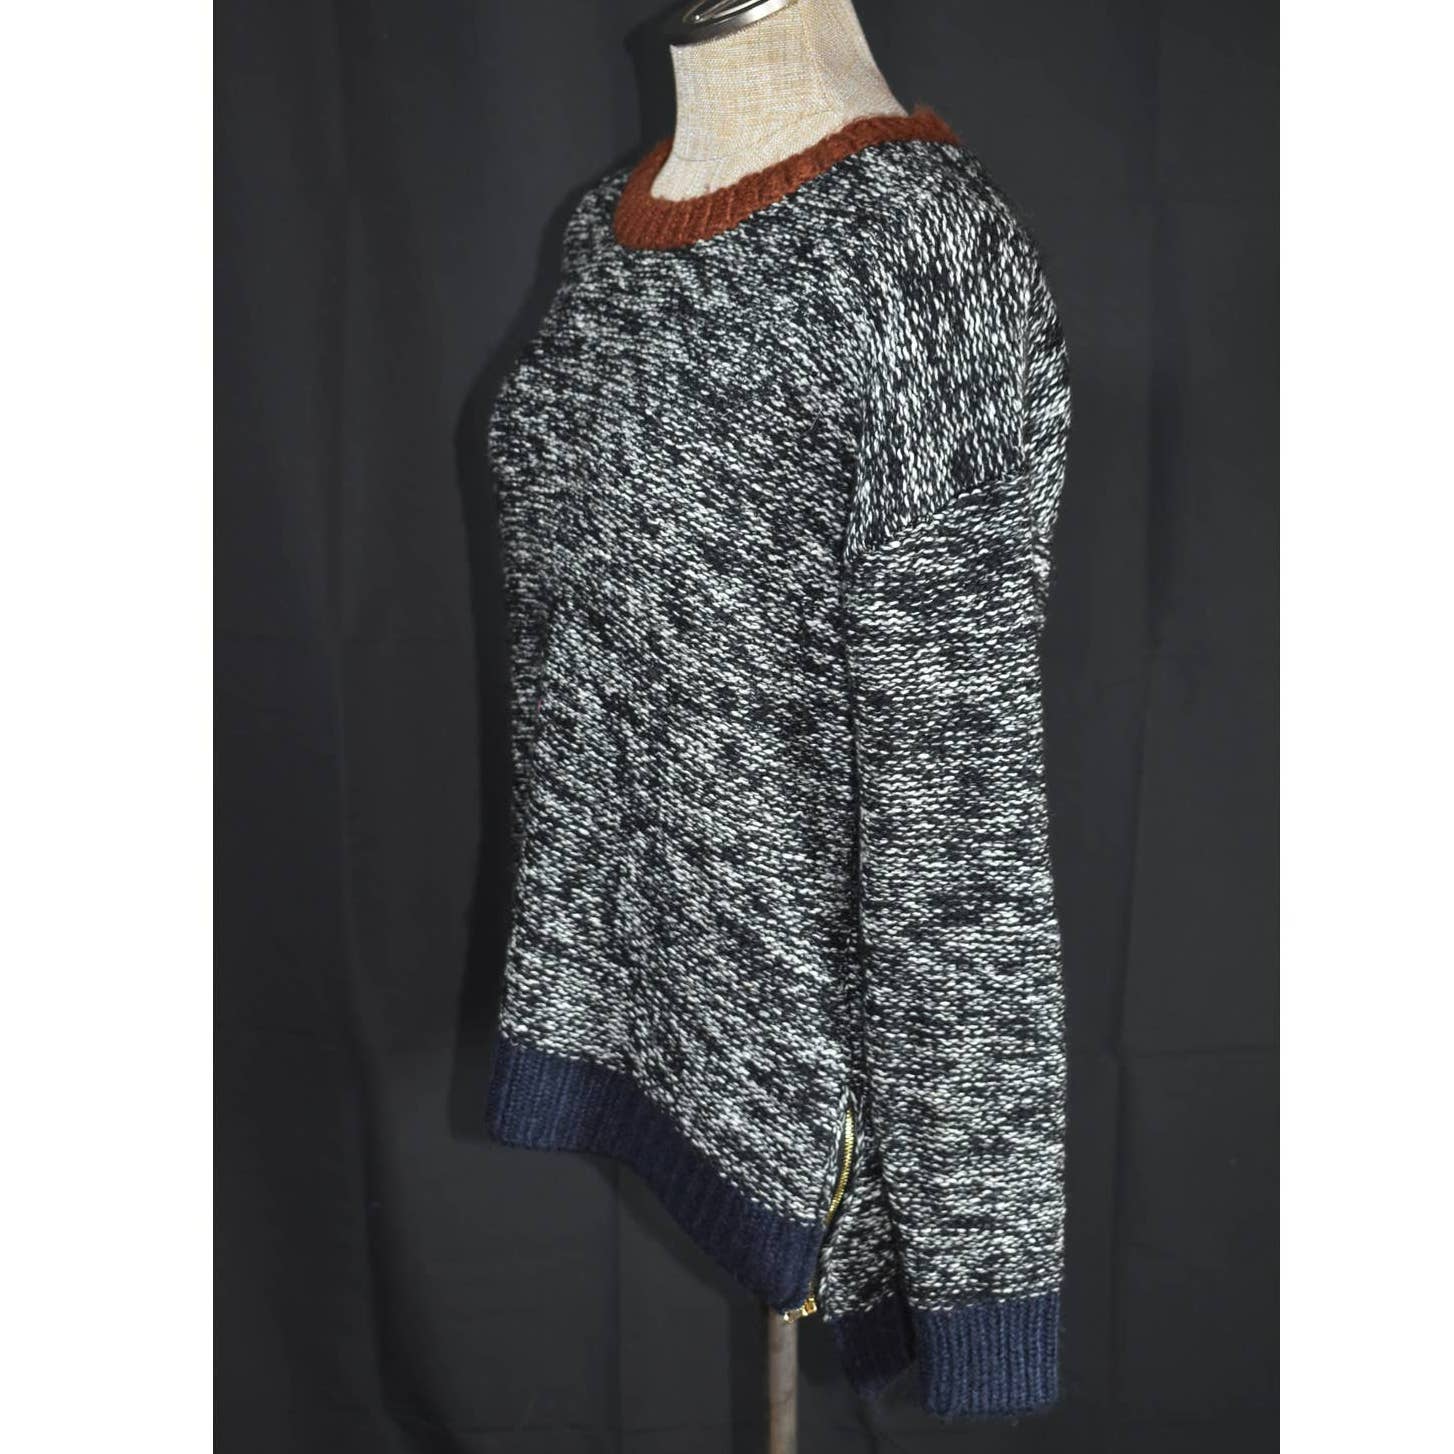 Trina Turk Black and White Knit Crewneck Sweater - S